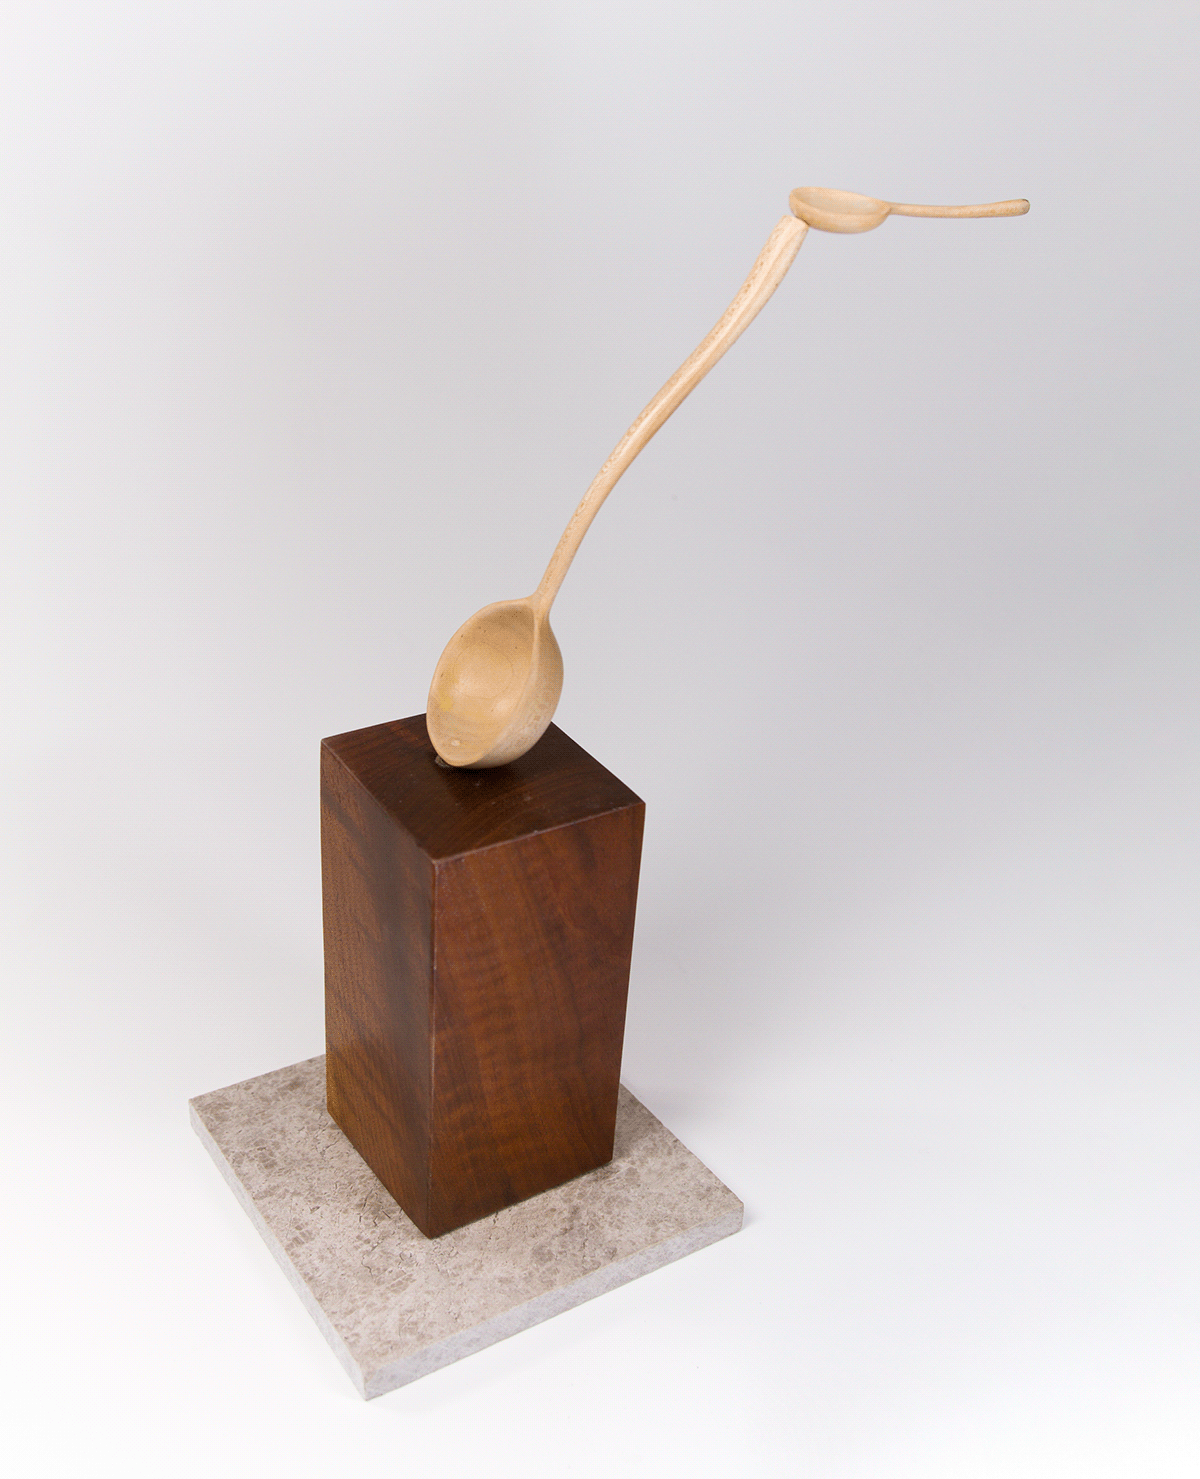 sculpture spoon design wood working  graphic design  art package design  Exhibition  Photography 